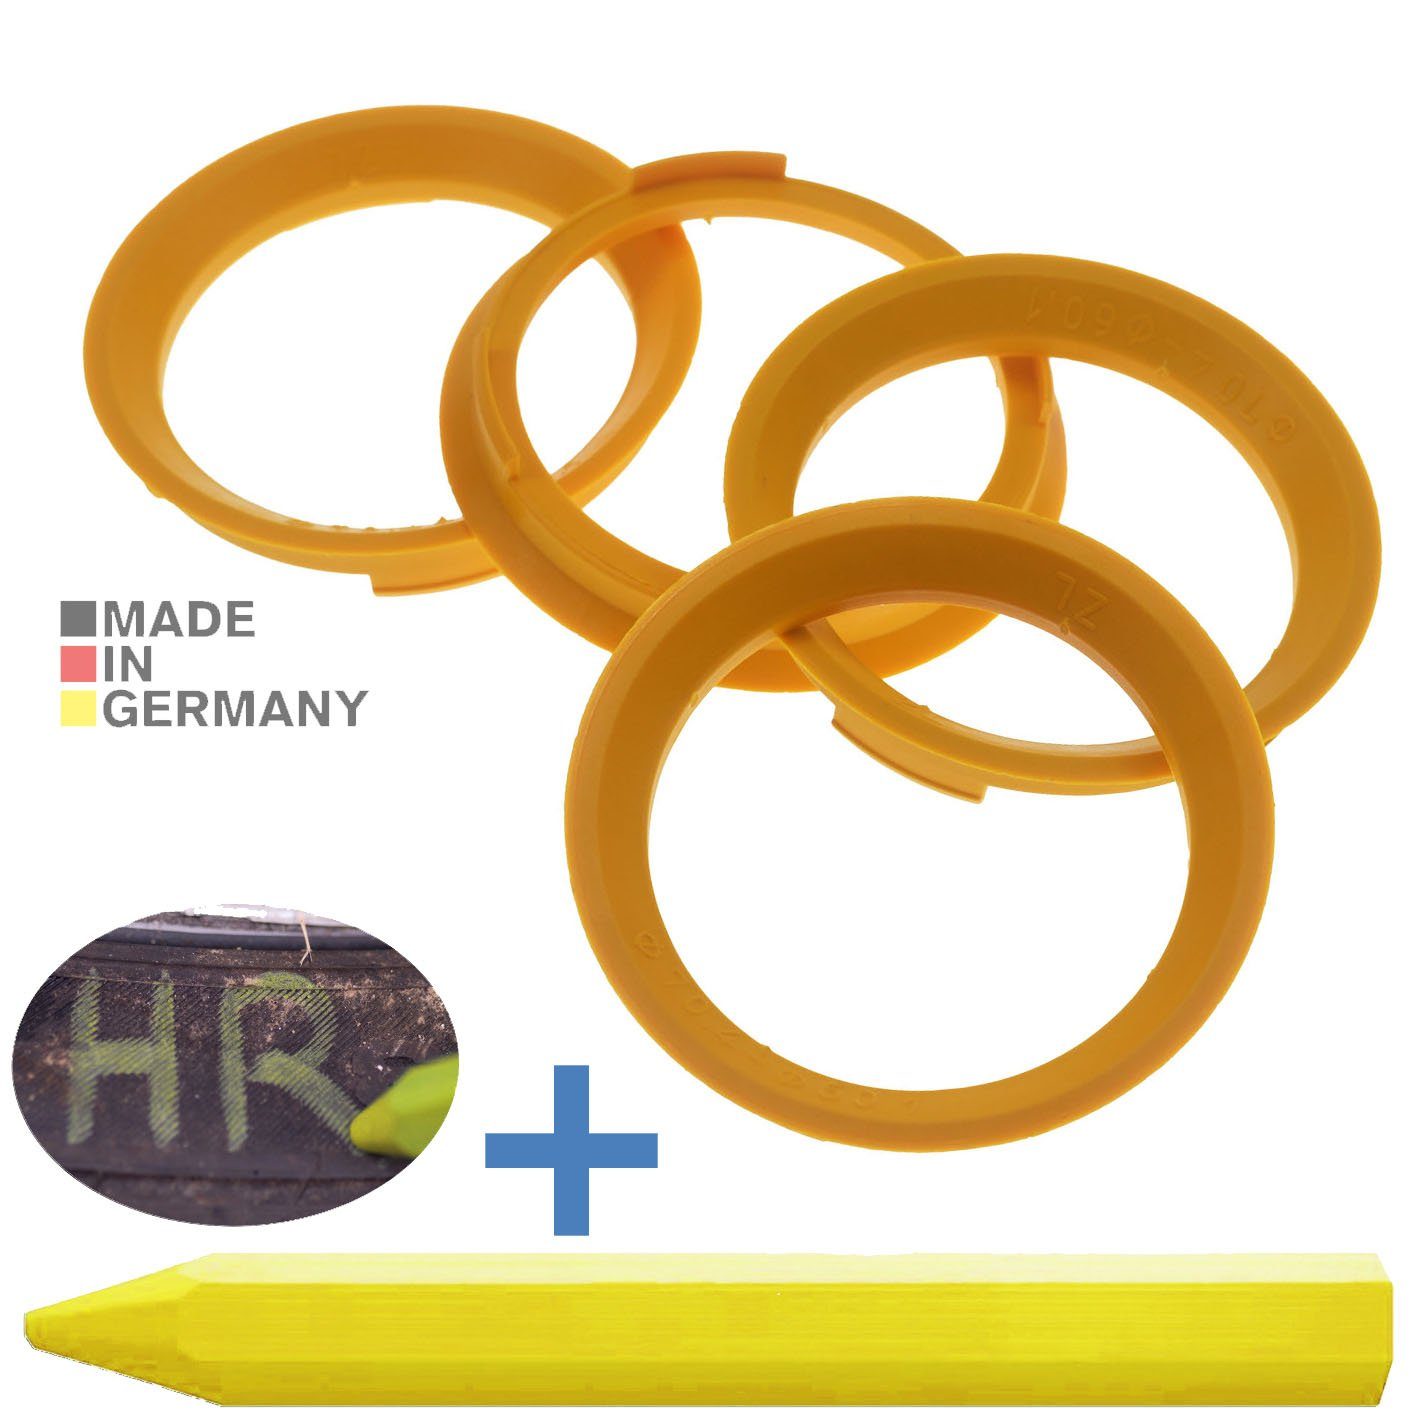 Maße: mm 70,4 Stift, Gelb Kreide Reifen 1x RKC Fett 4X Felgen Ringe Zentrierringe 60,1 x Reifenstift +